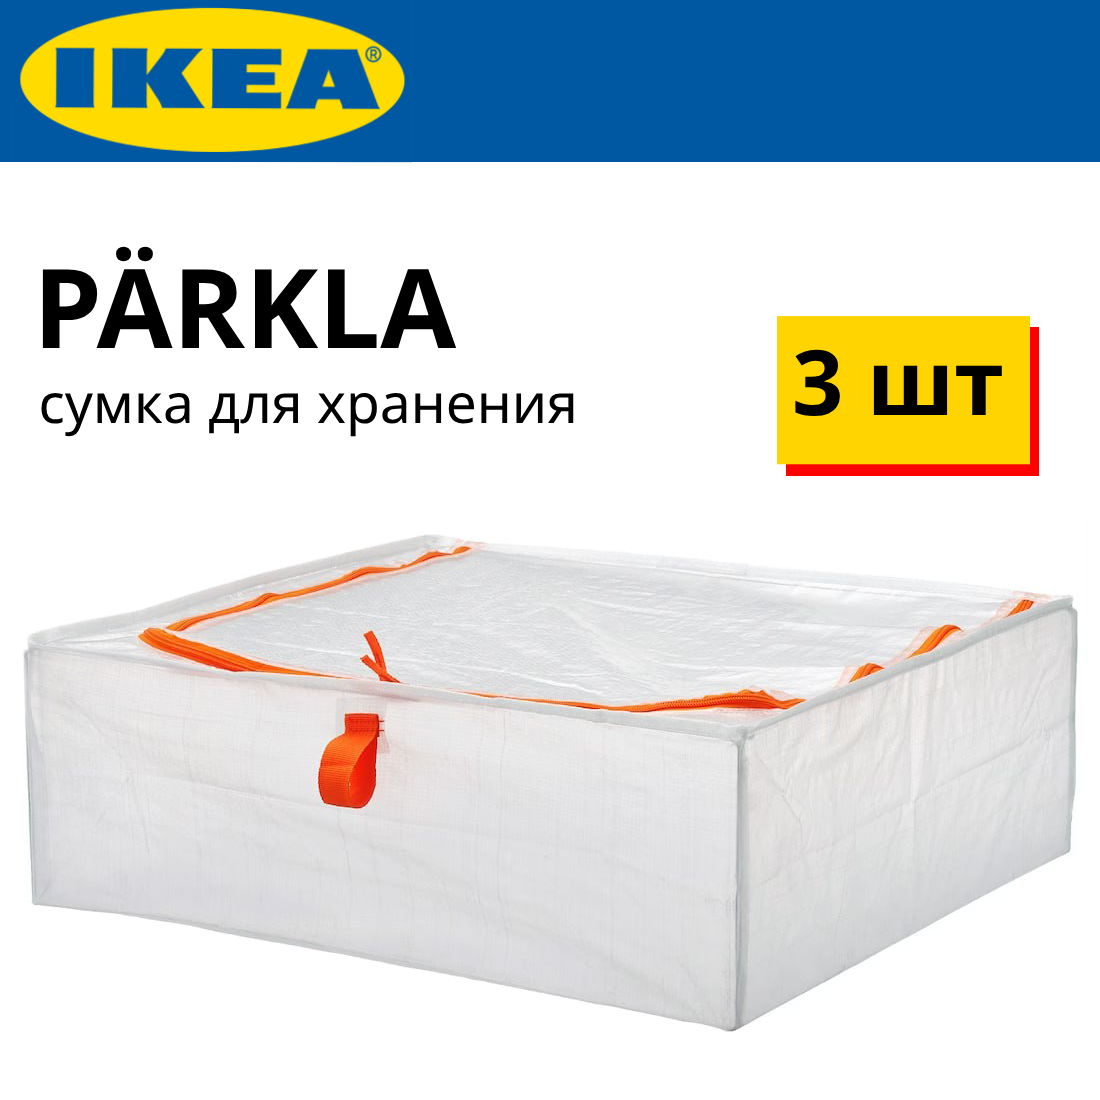 IKEA Parkla сумка для хранения, 55х49х19см, 3 шт